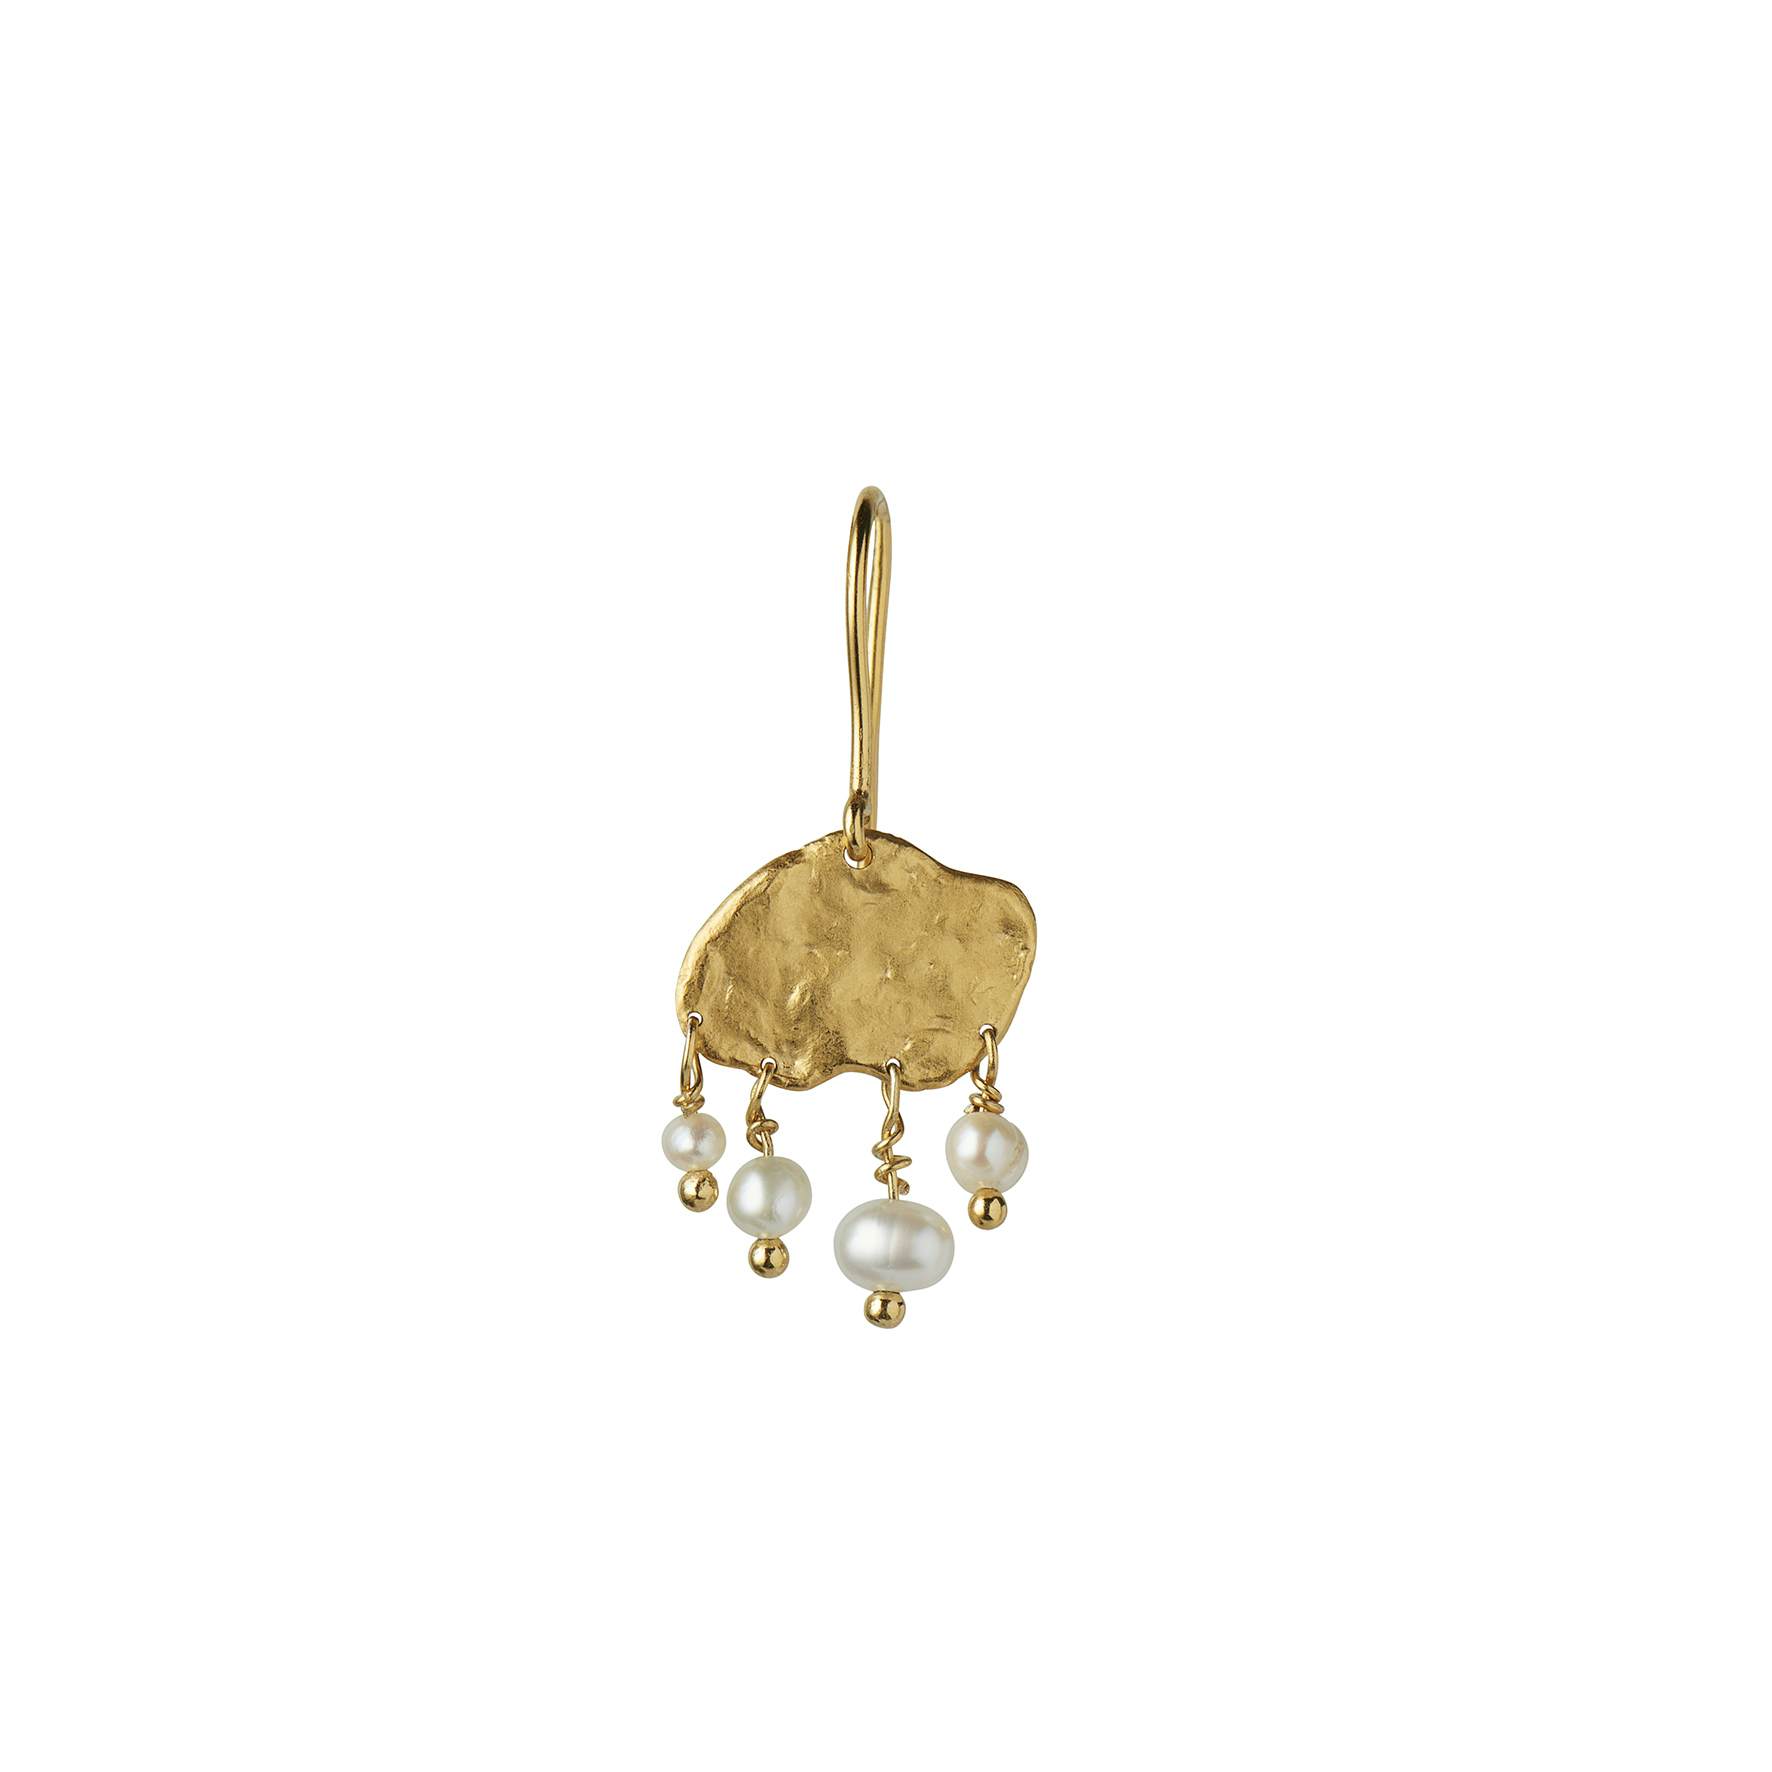 Big Gold Splash Earring – Elegant Pearls von STINE A Jewelry in Vergoldet-Silber Sterling 925